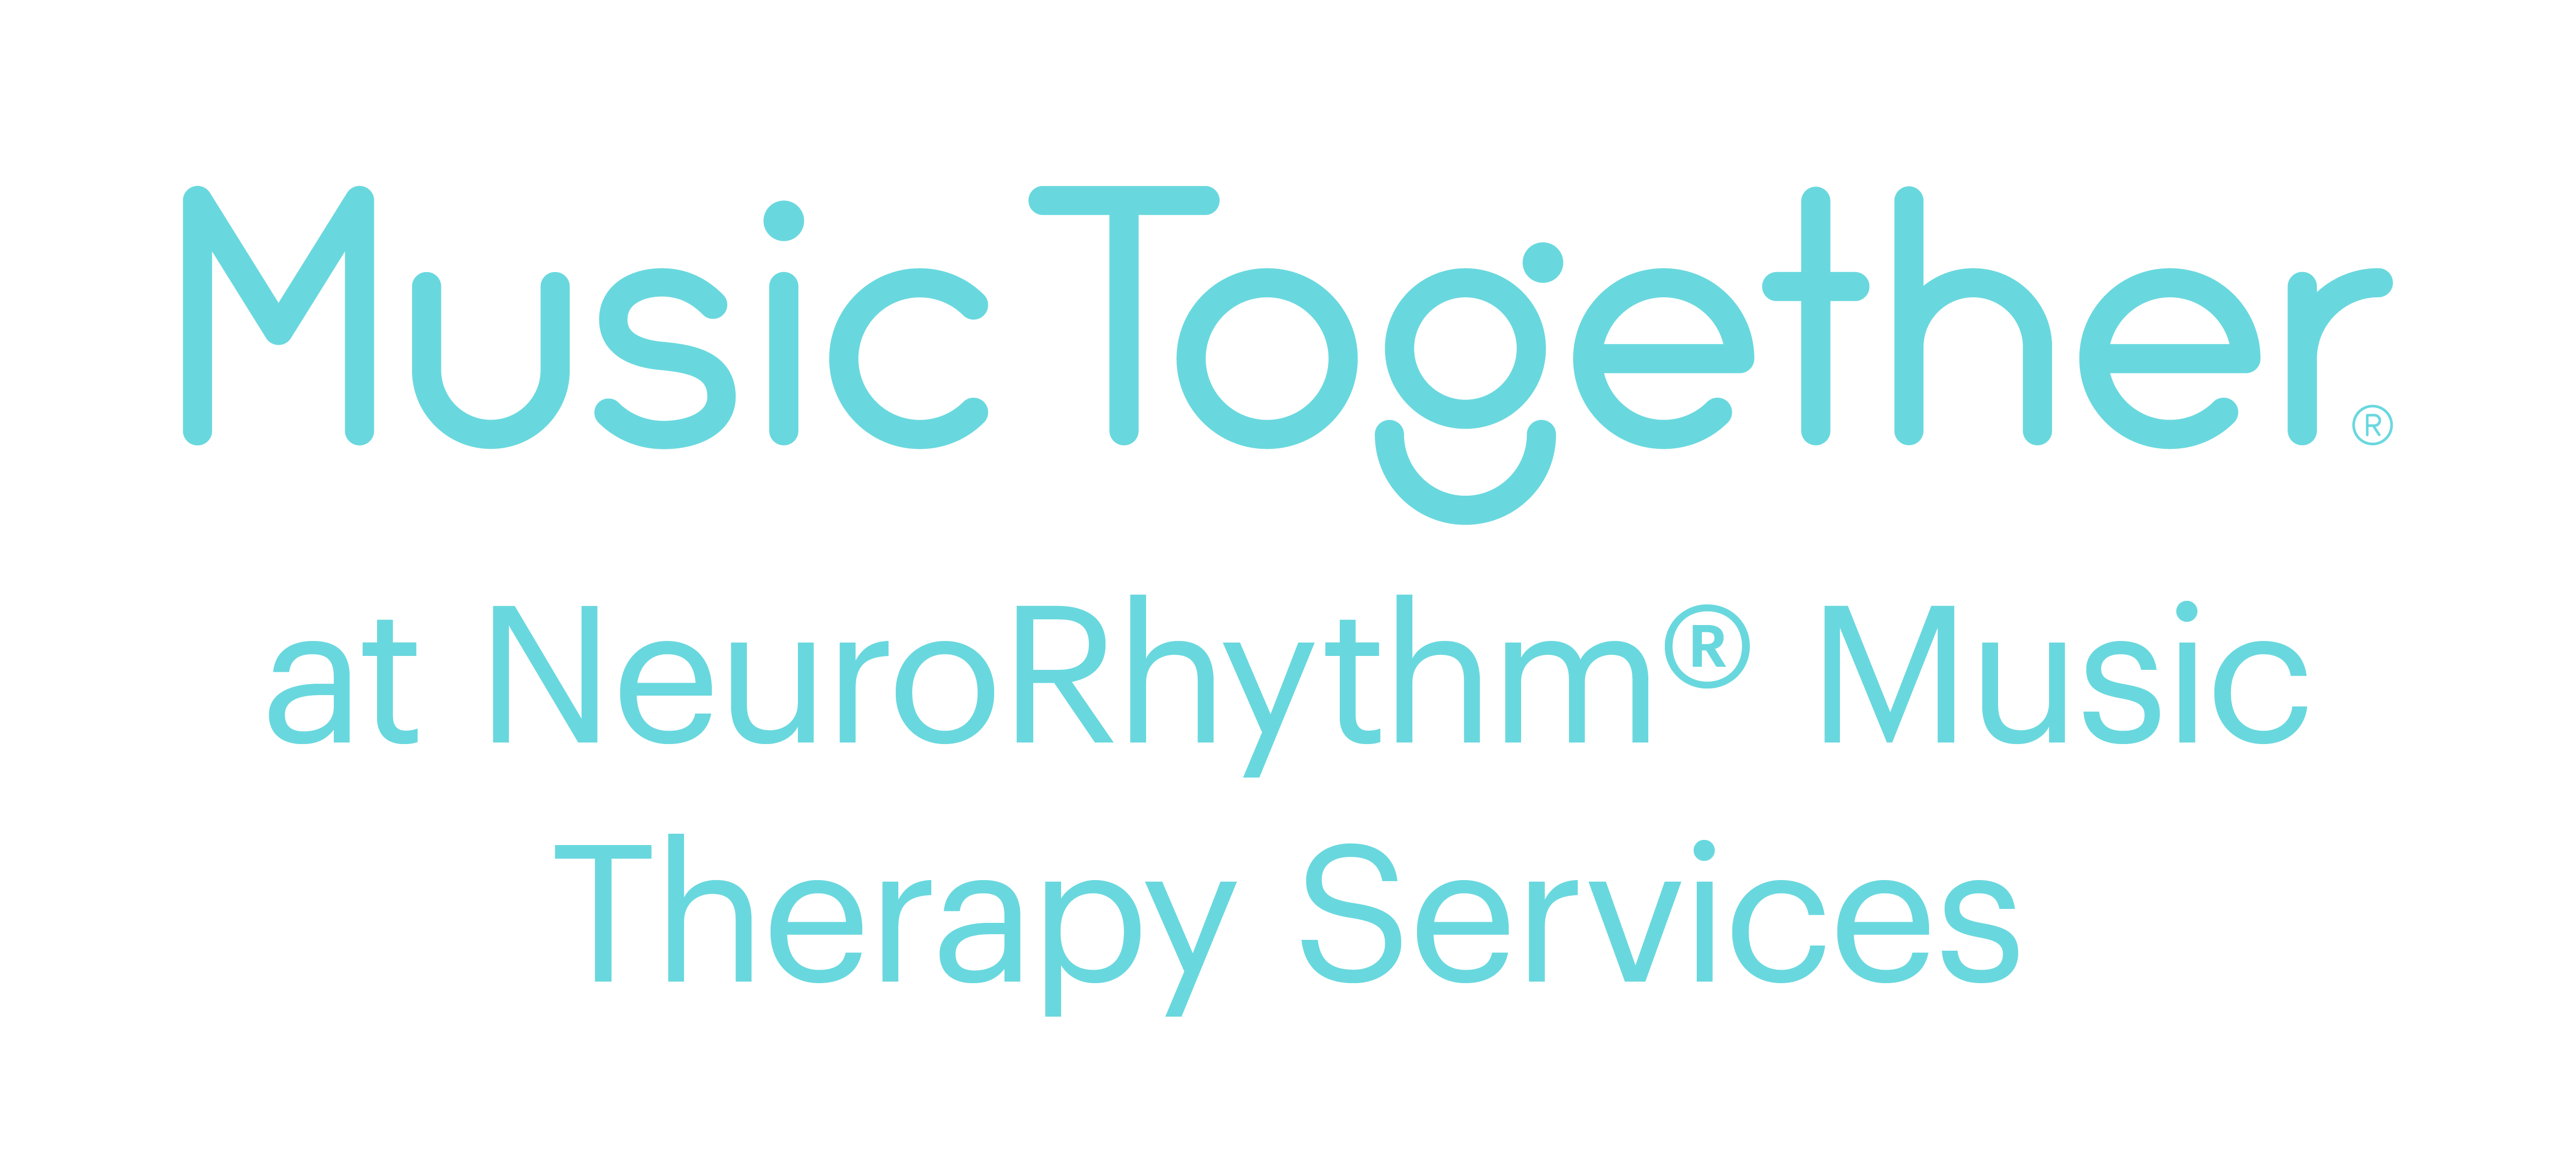 NeuroRhythmMusicTherapyServices-Horz_RGB_TEAL.png